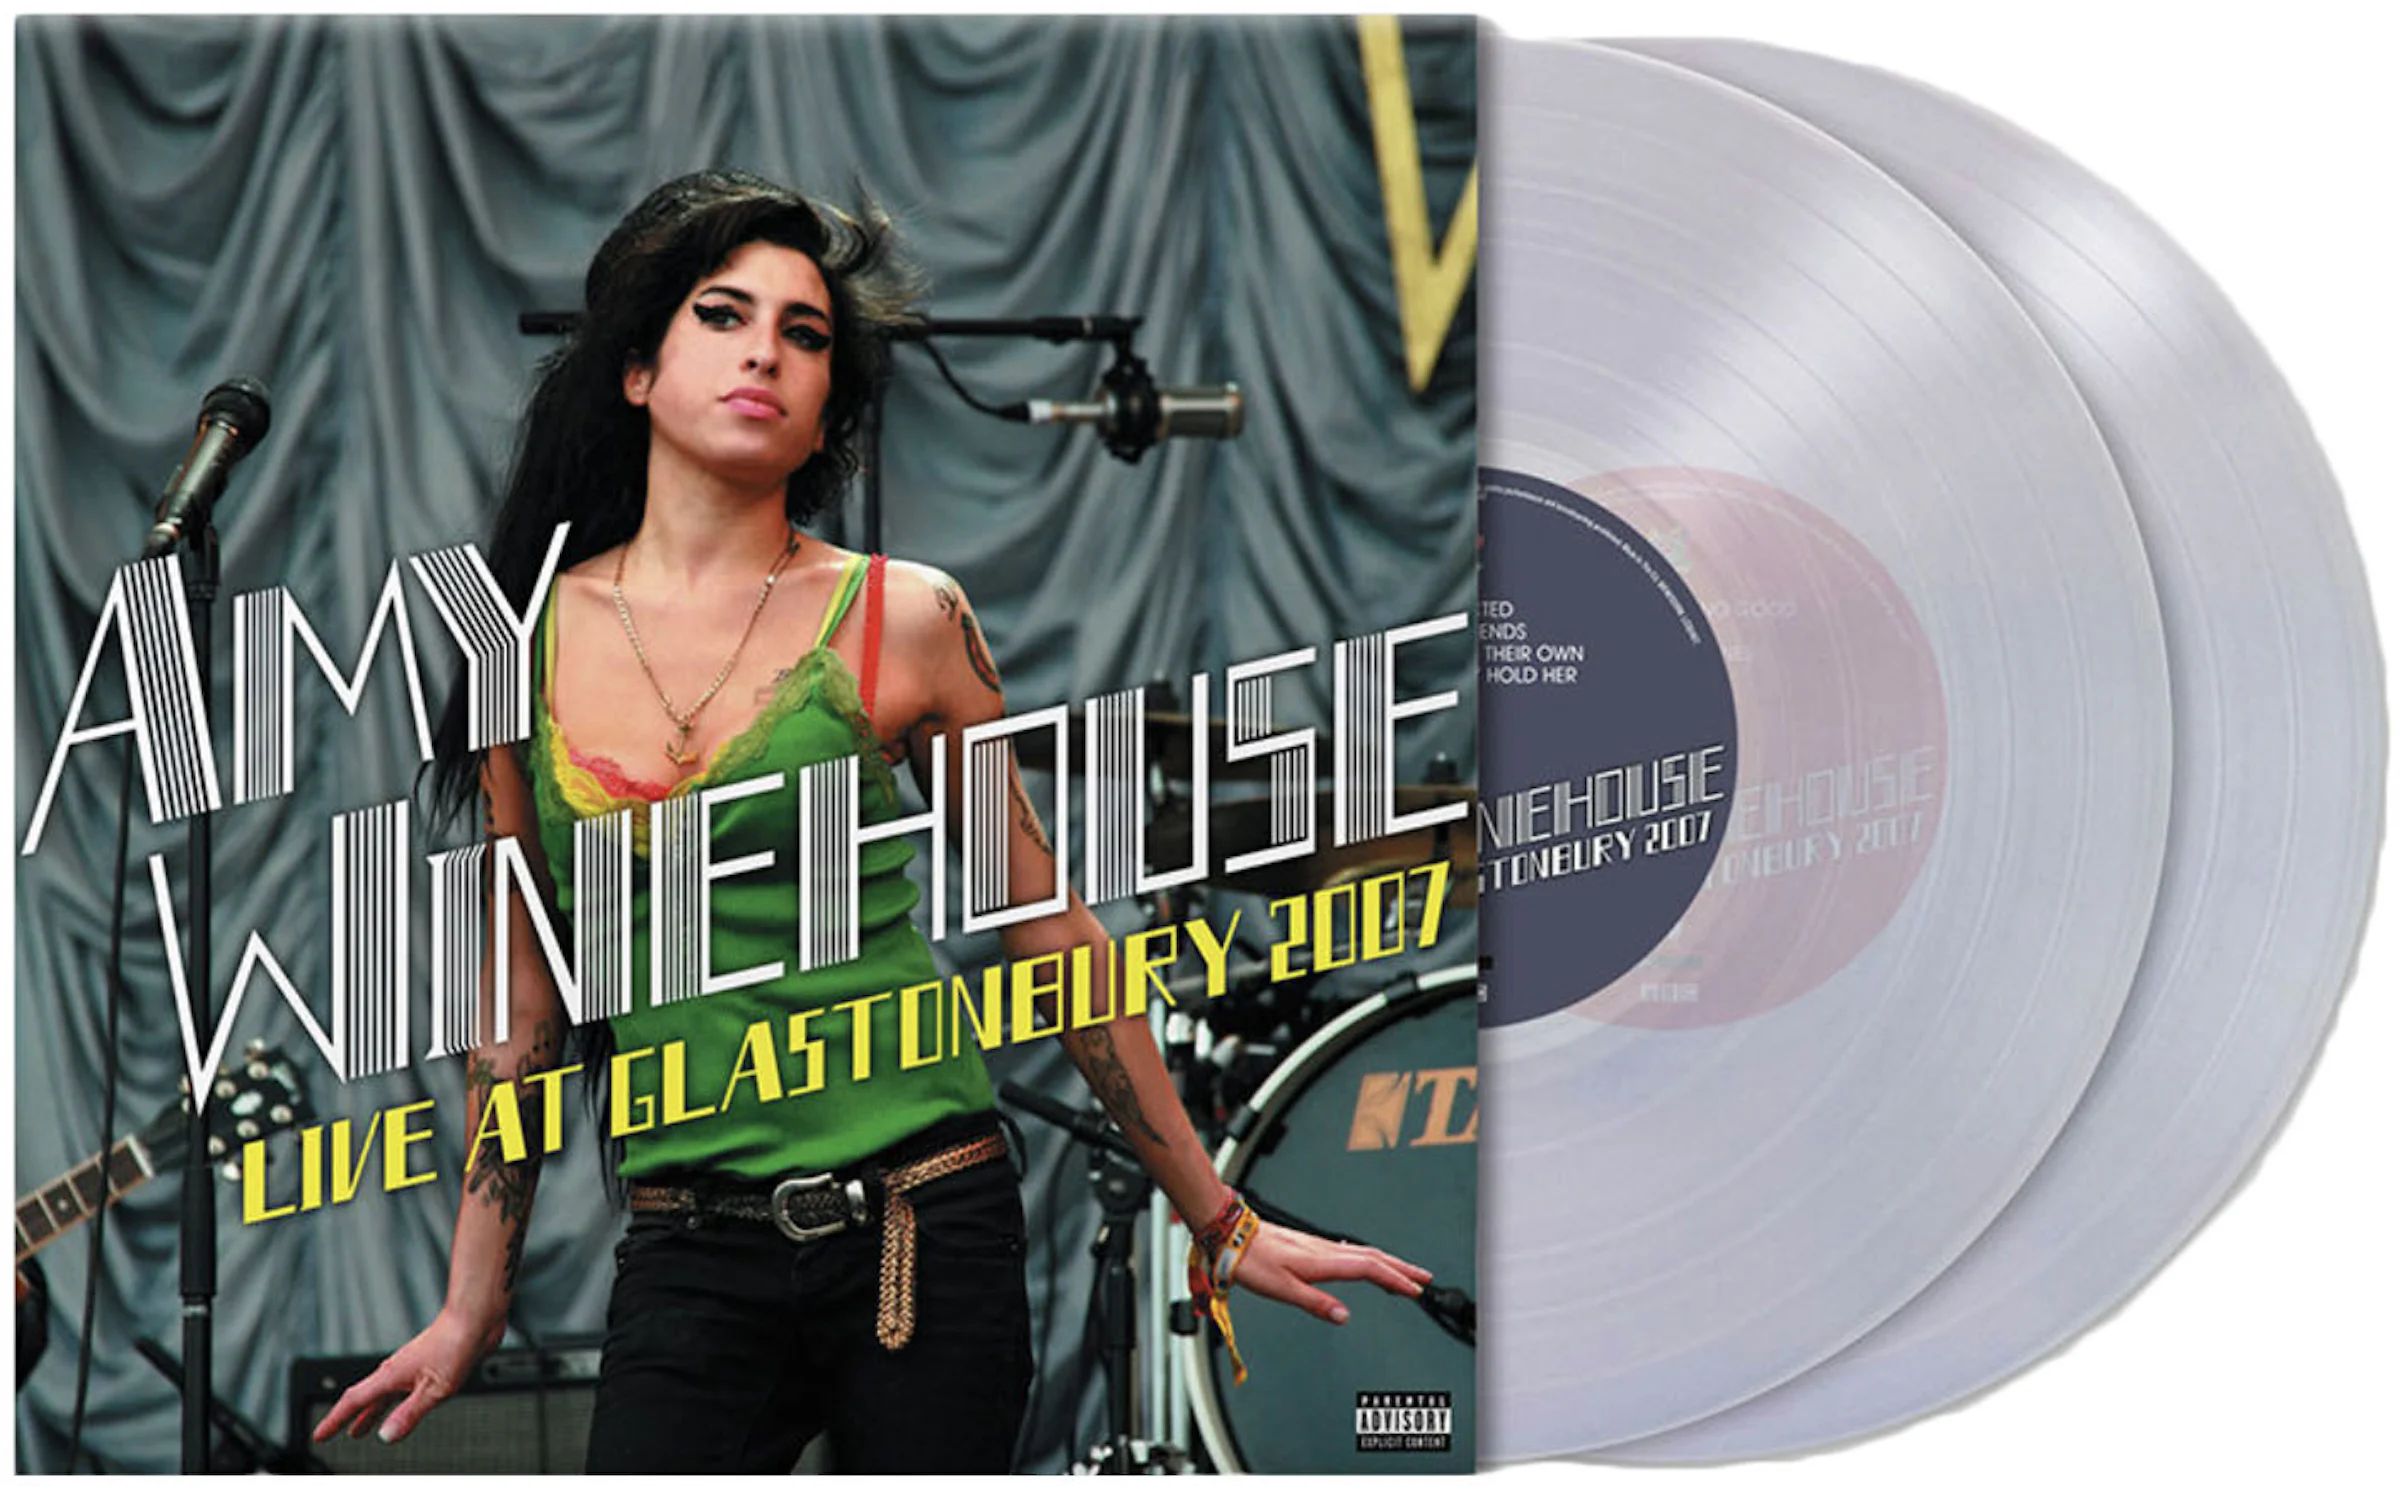 Amy Winehouse Live at Glastonbury 2007: Exclusive 2XLP Vinyl Clear